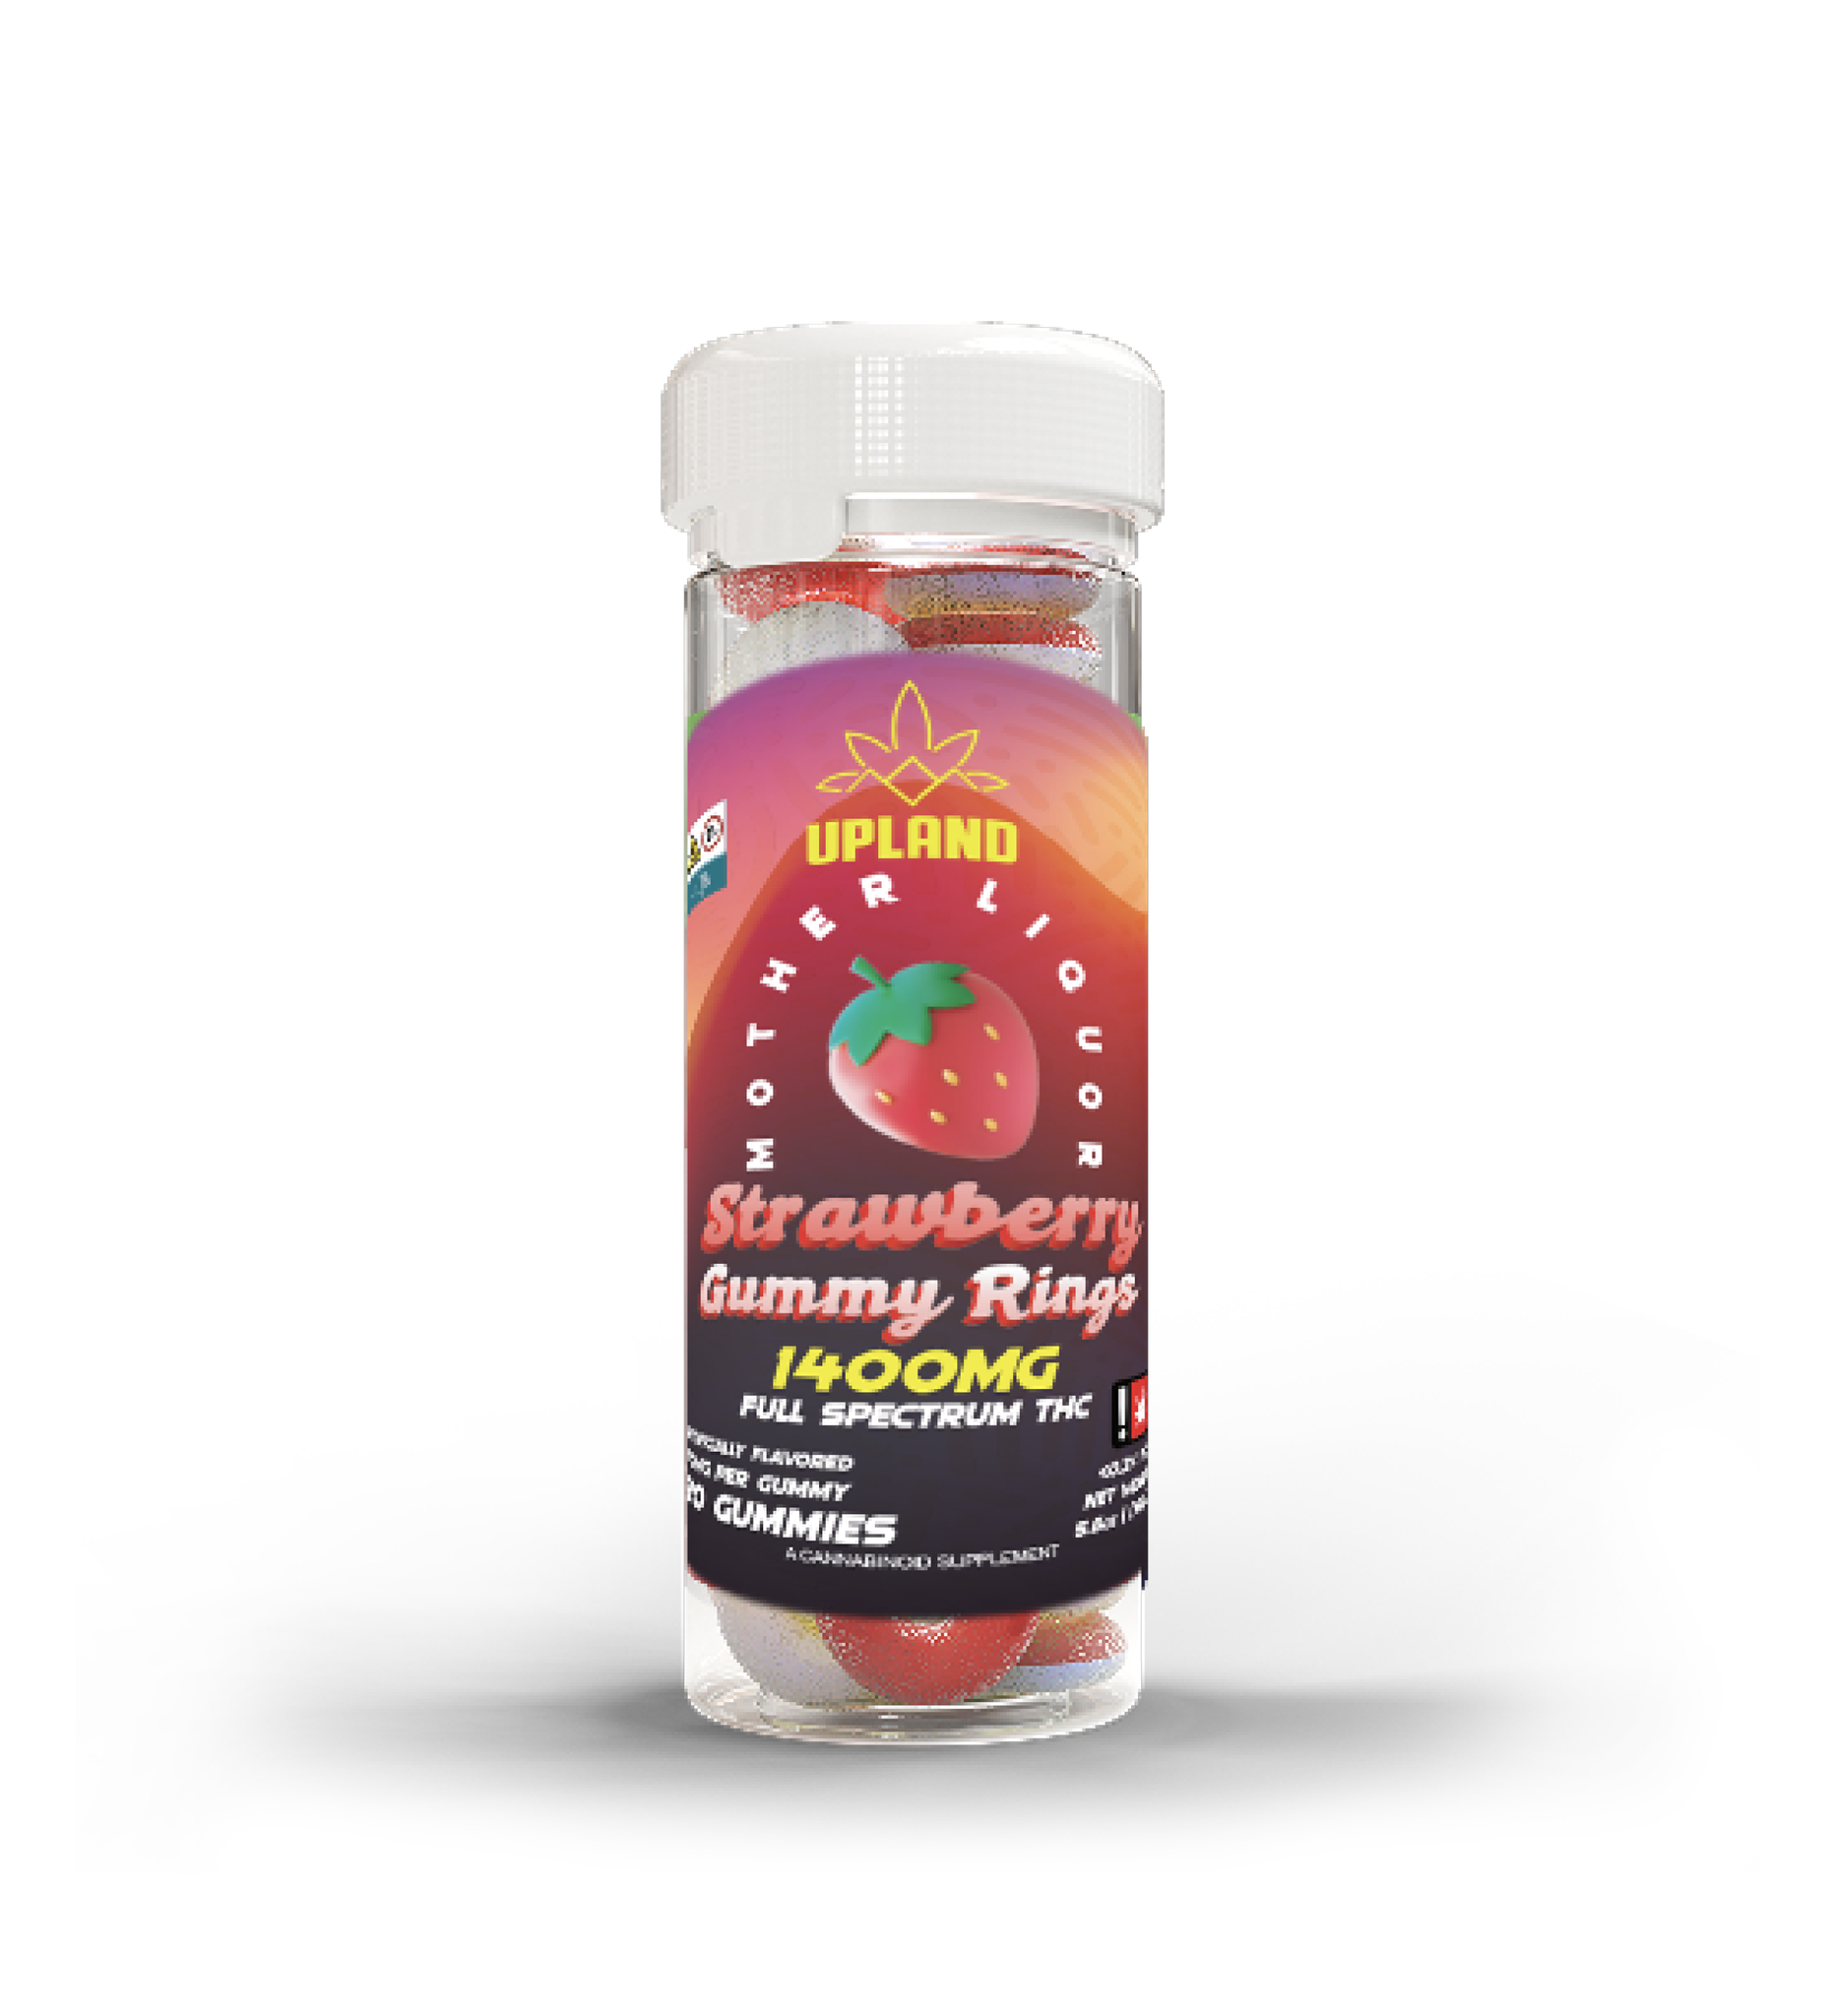 D9 Strawberry 1400MG Mother Liquor Gummies